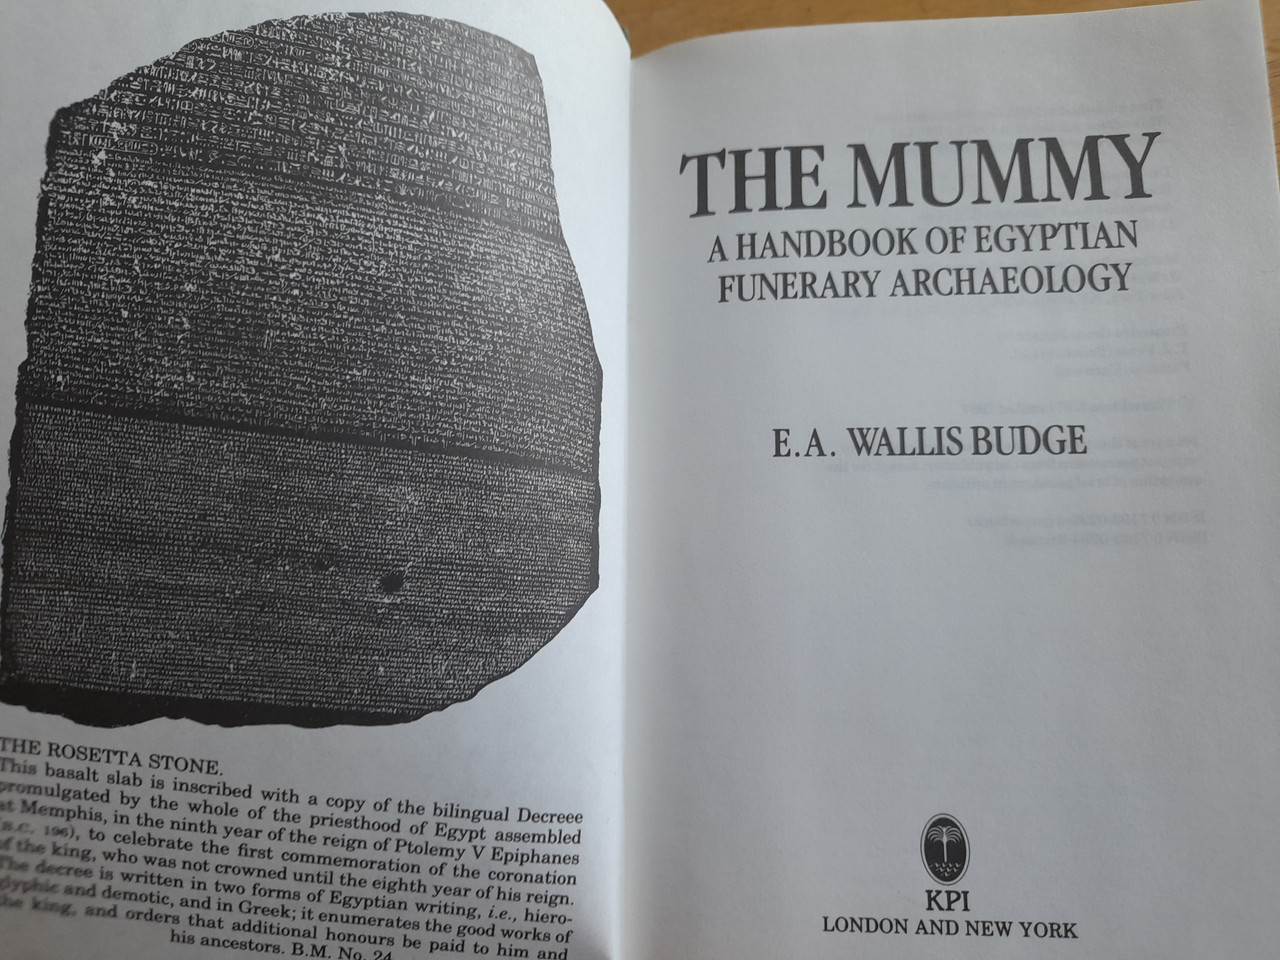 Wallis Budge, E.A - The Mummy : A Handbook of Egyptian Funerary Archaeology